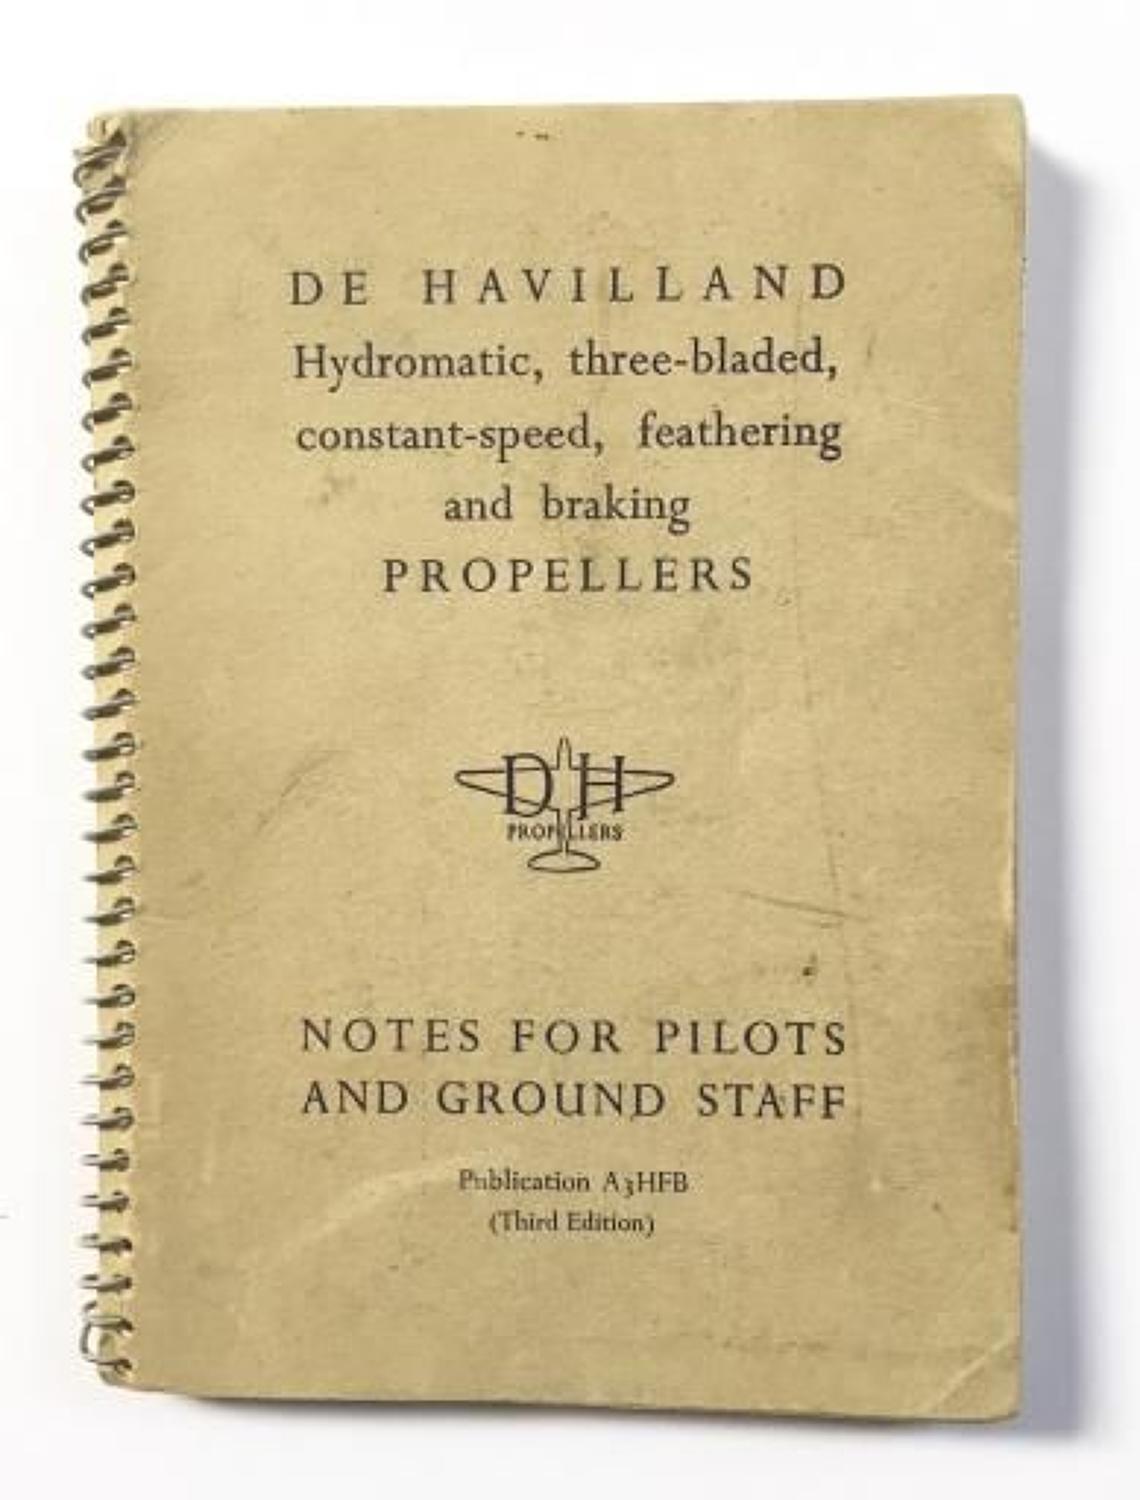 De Havilland Hydromatic Three Bladed Constant Speed Propellers Pilots